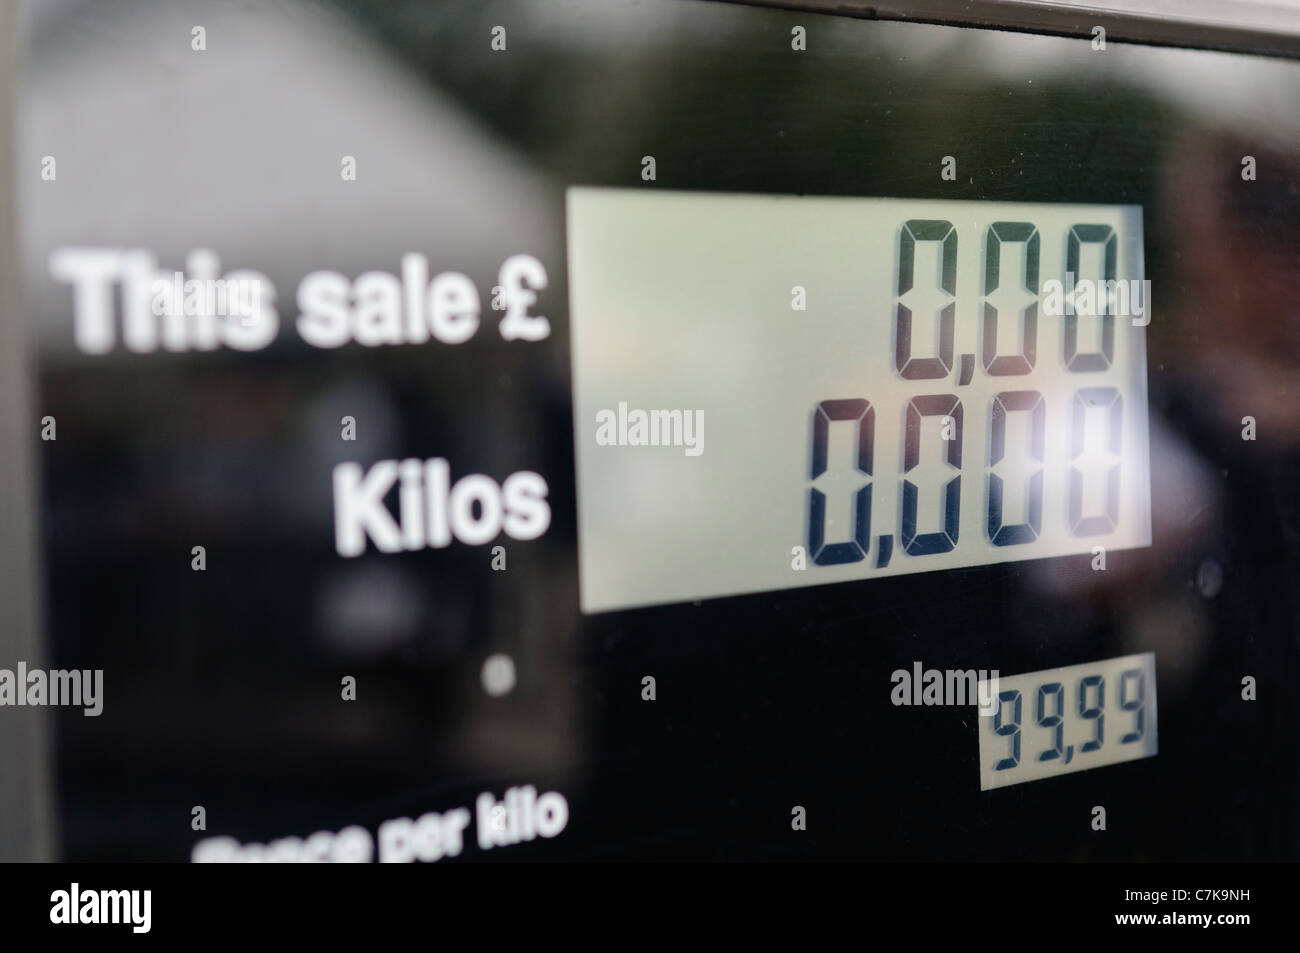 Closeup detail of a hydrogen fuel pump with measurement unit in kilograms Stock Photo